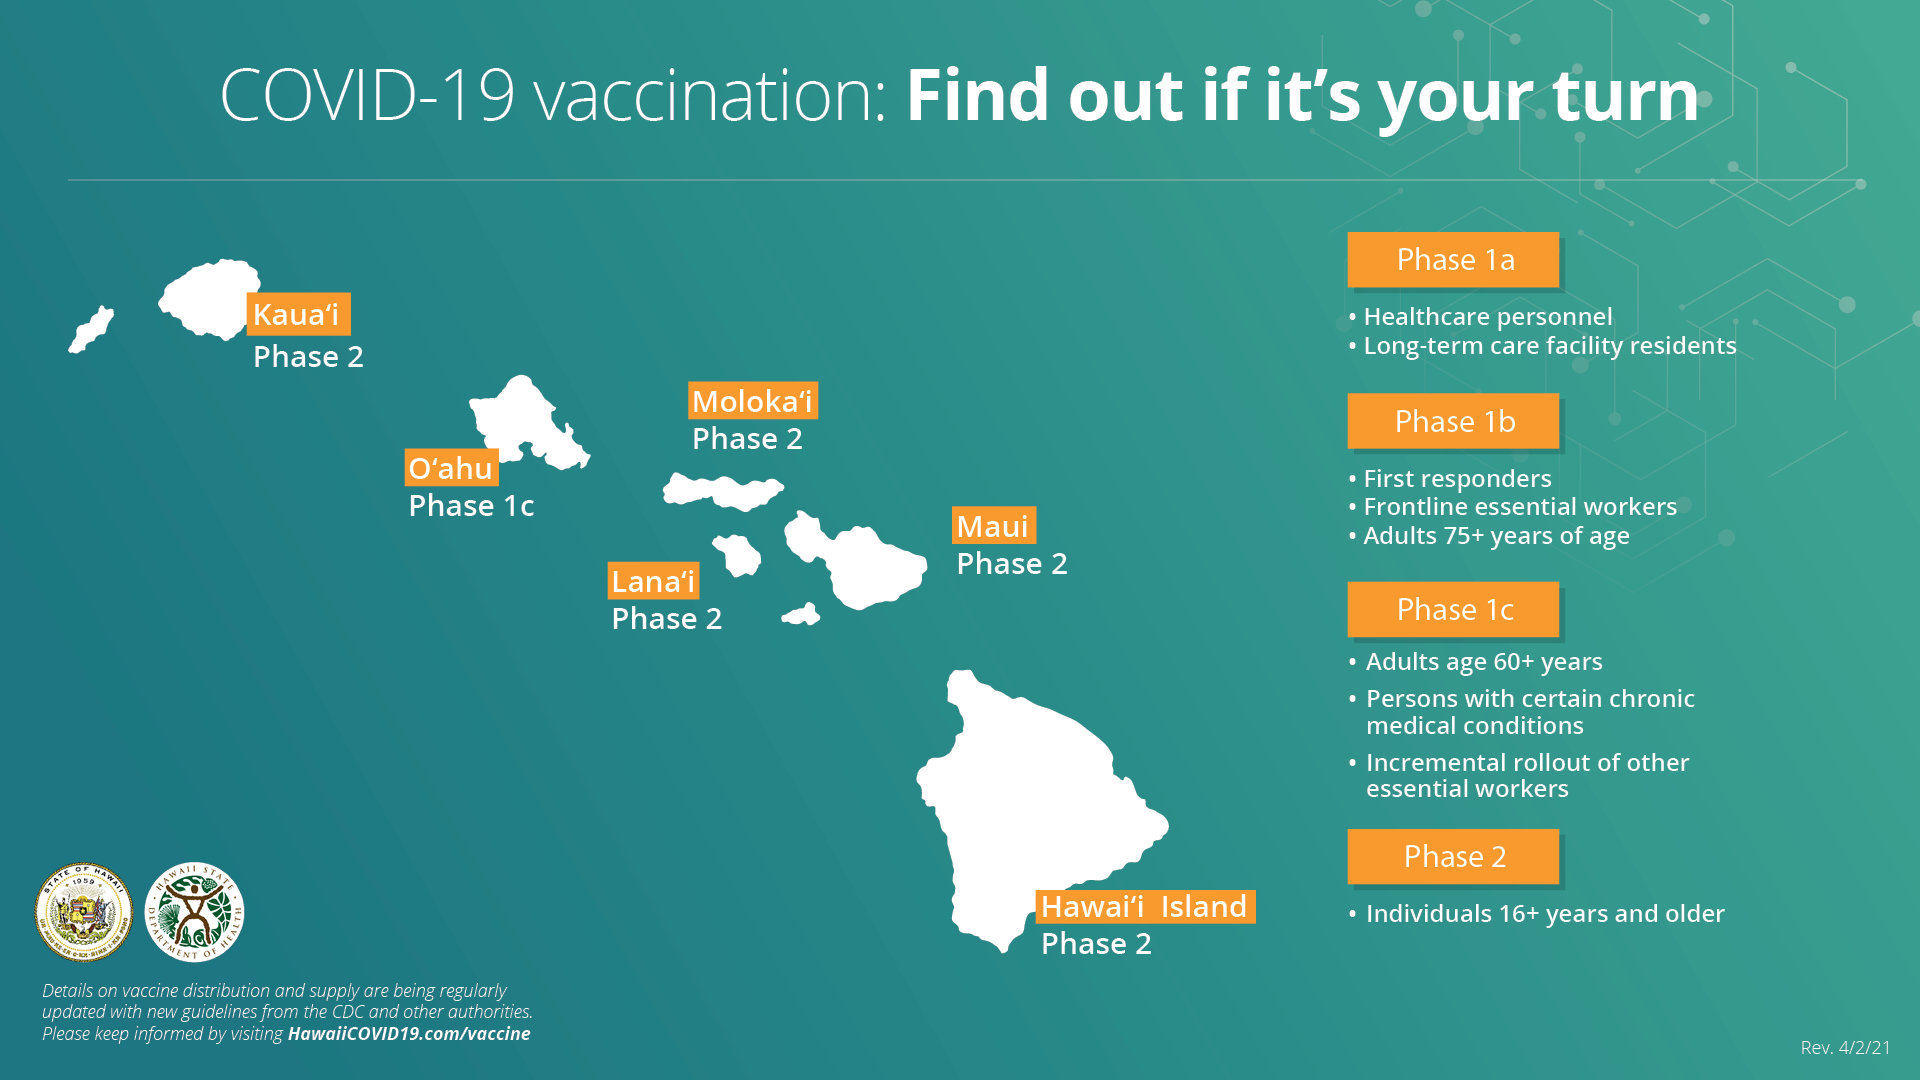 Vaccination Registration